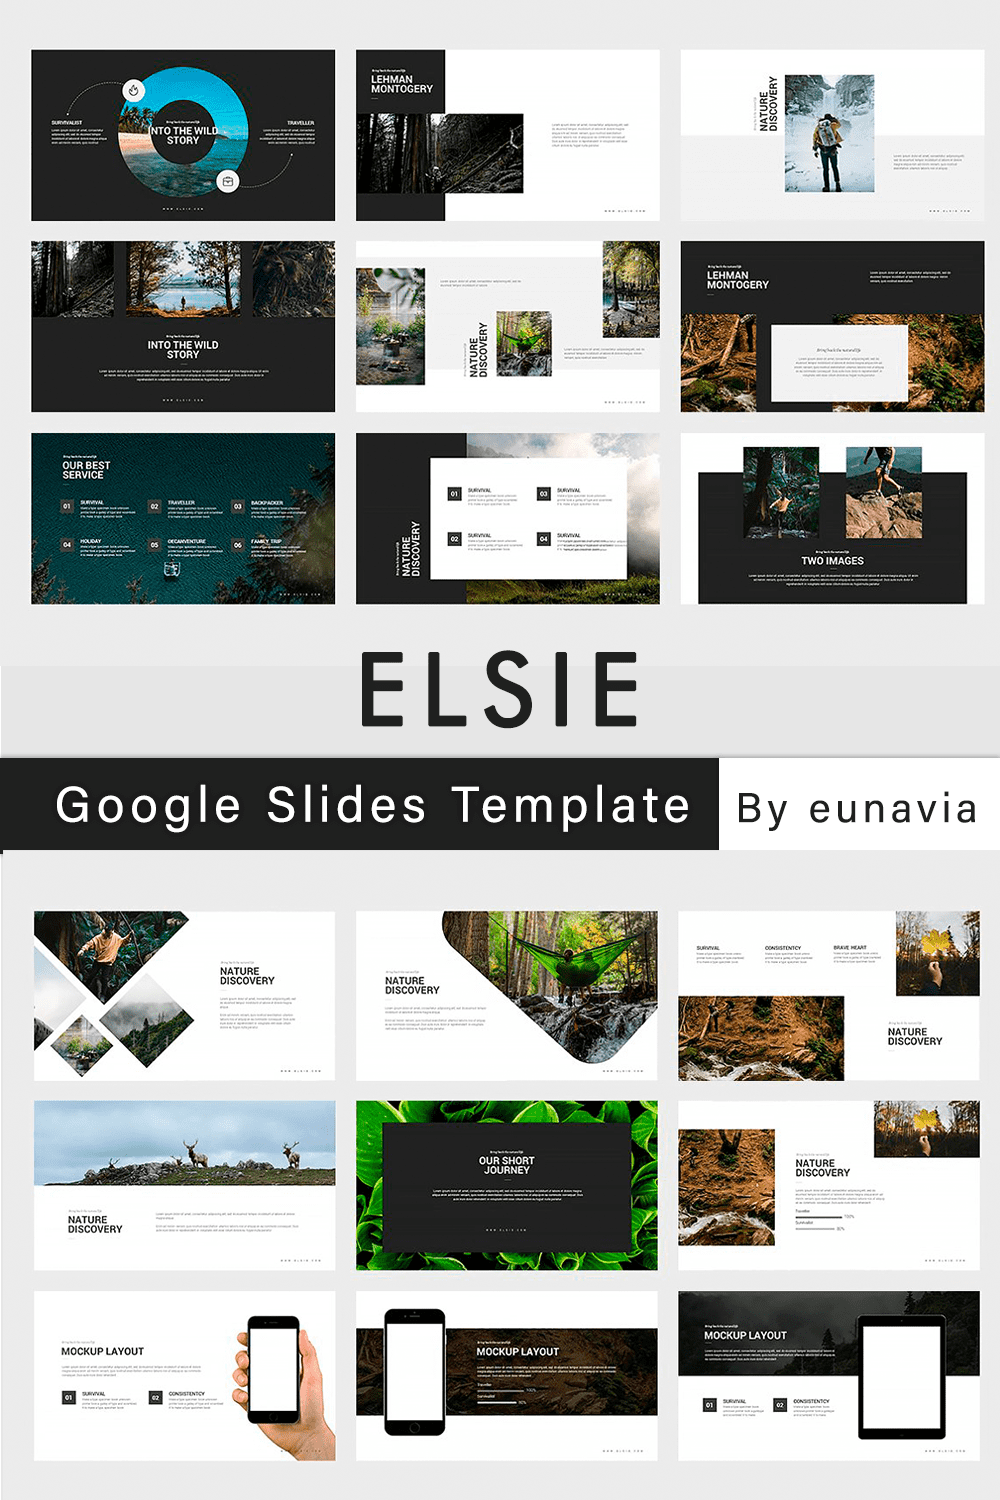 Elsie Google Slides Template - preview of Pinterest image.